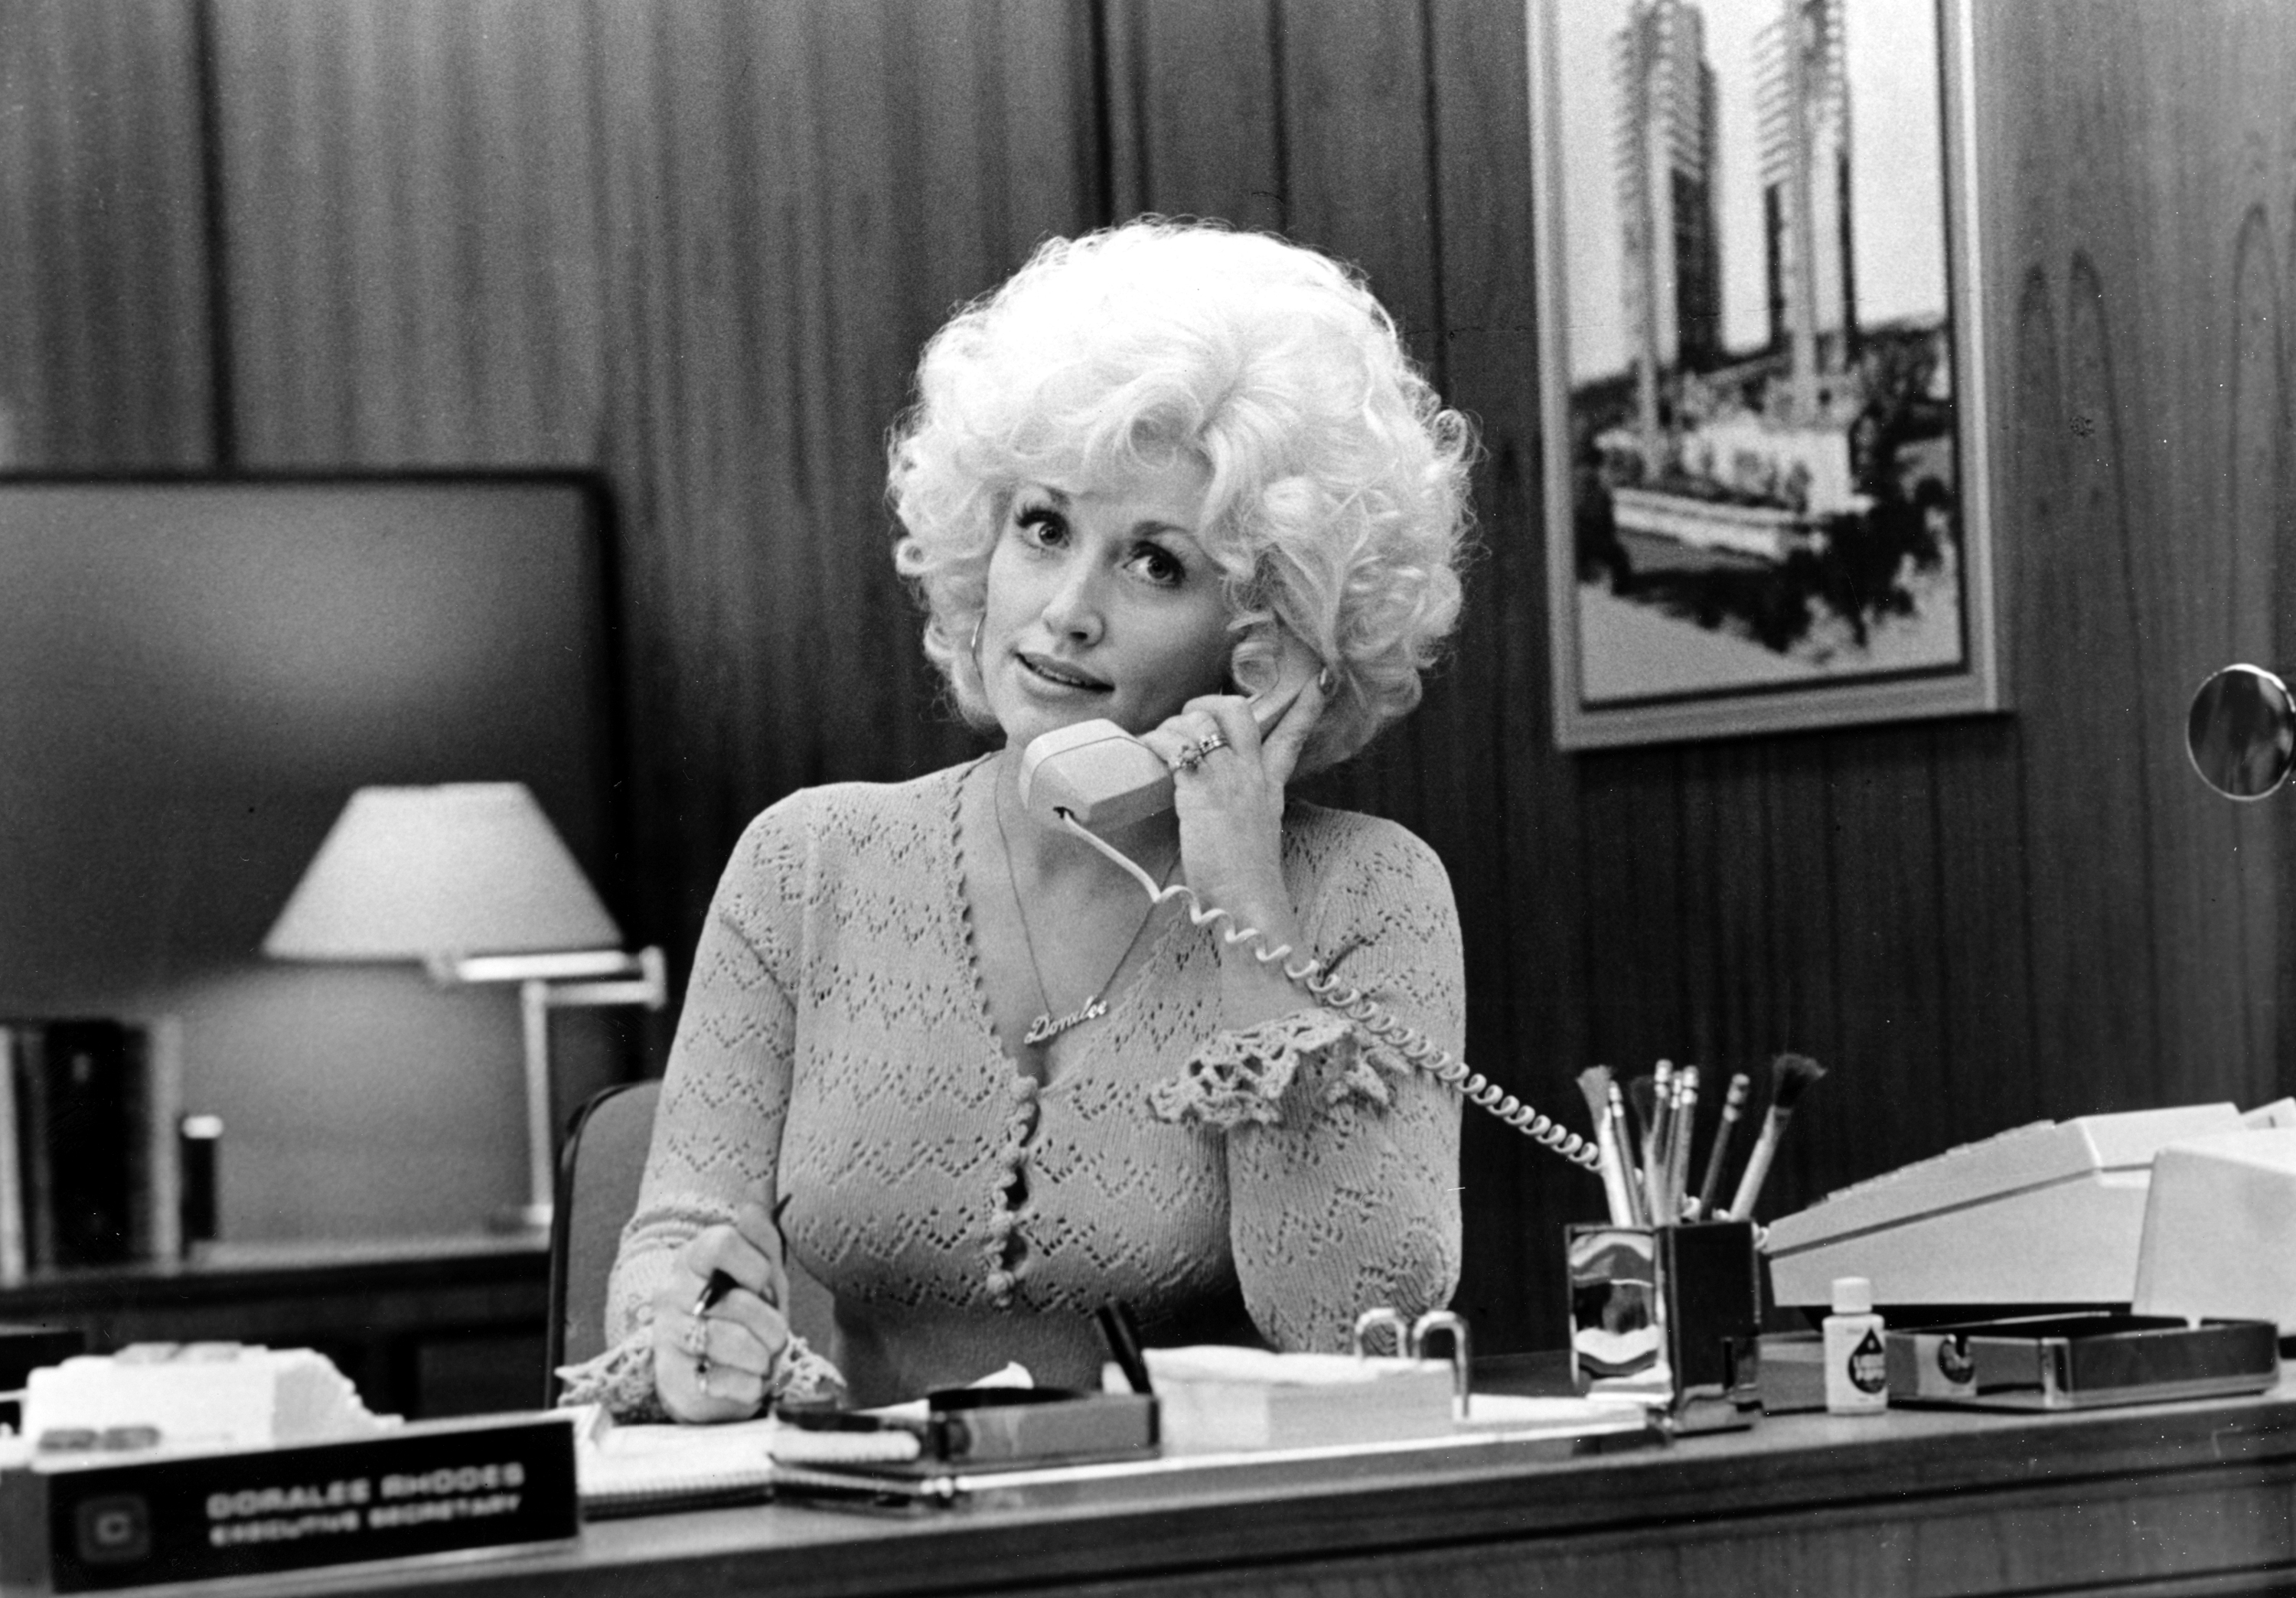 Dolly Parton answering a phone